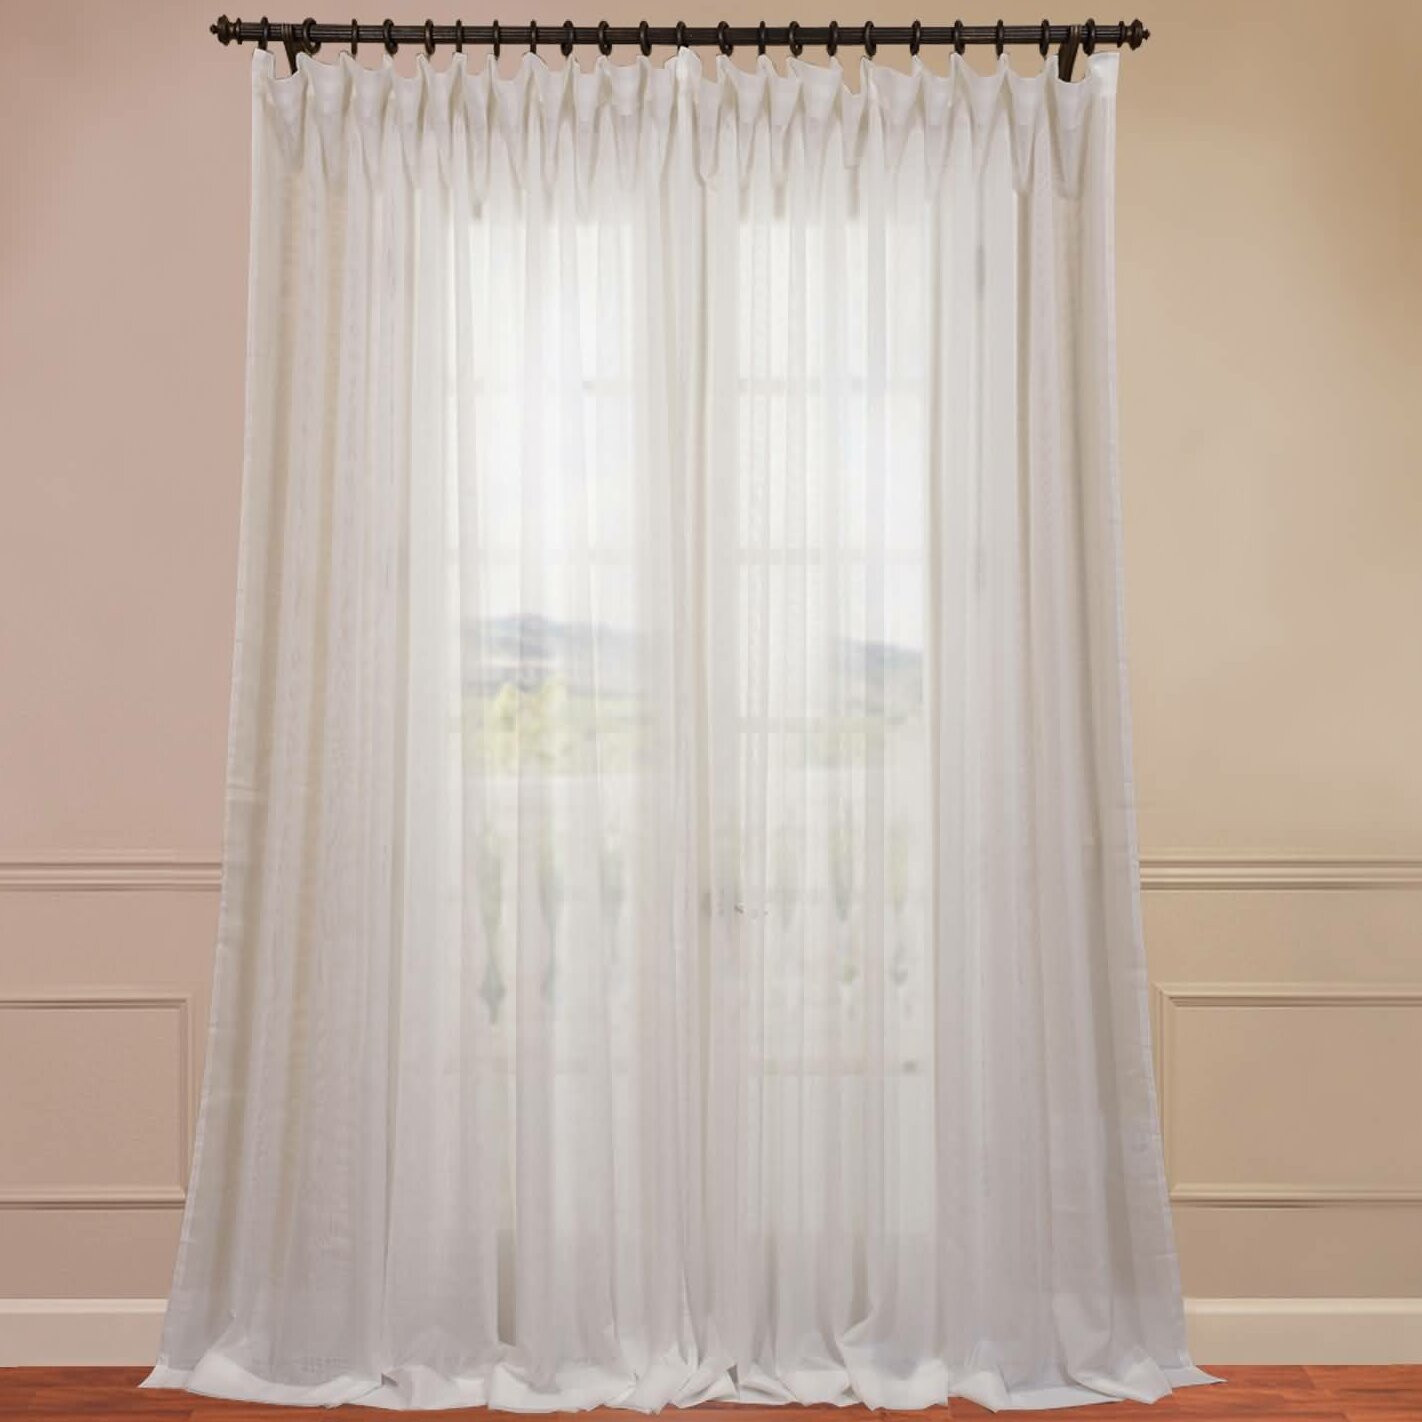 Curtains For Slider Doors White Sheer Curtain Panels